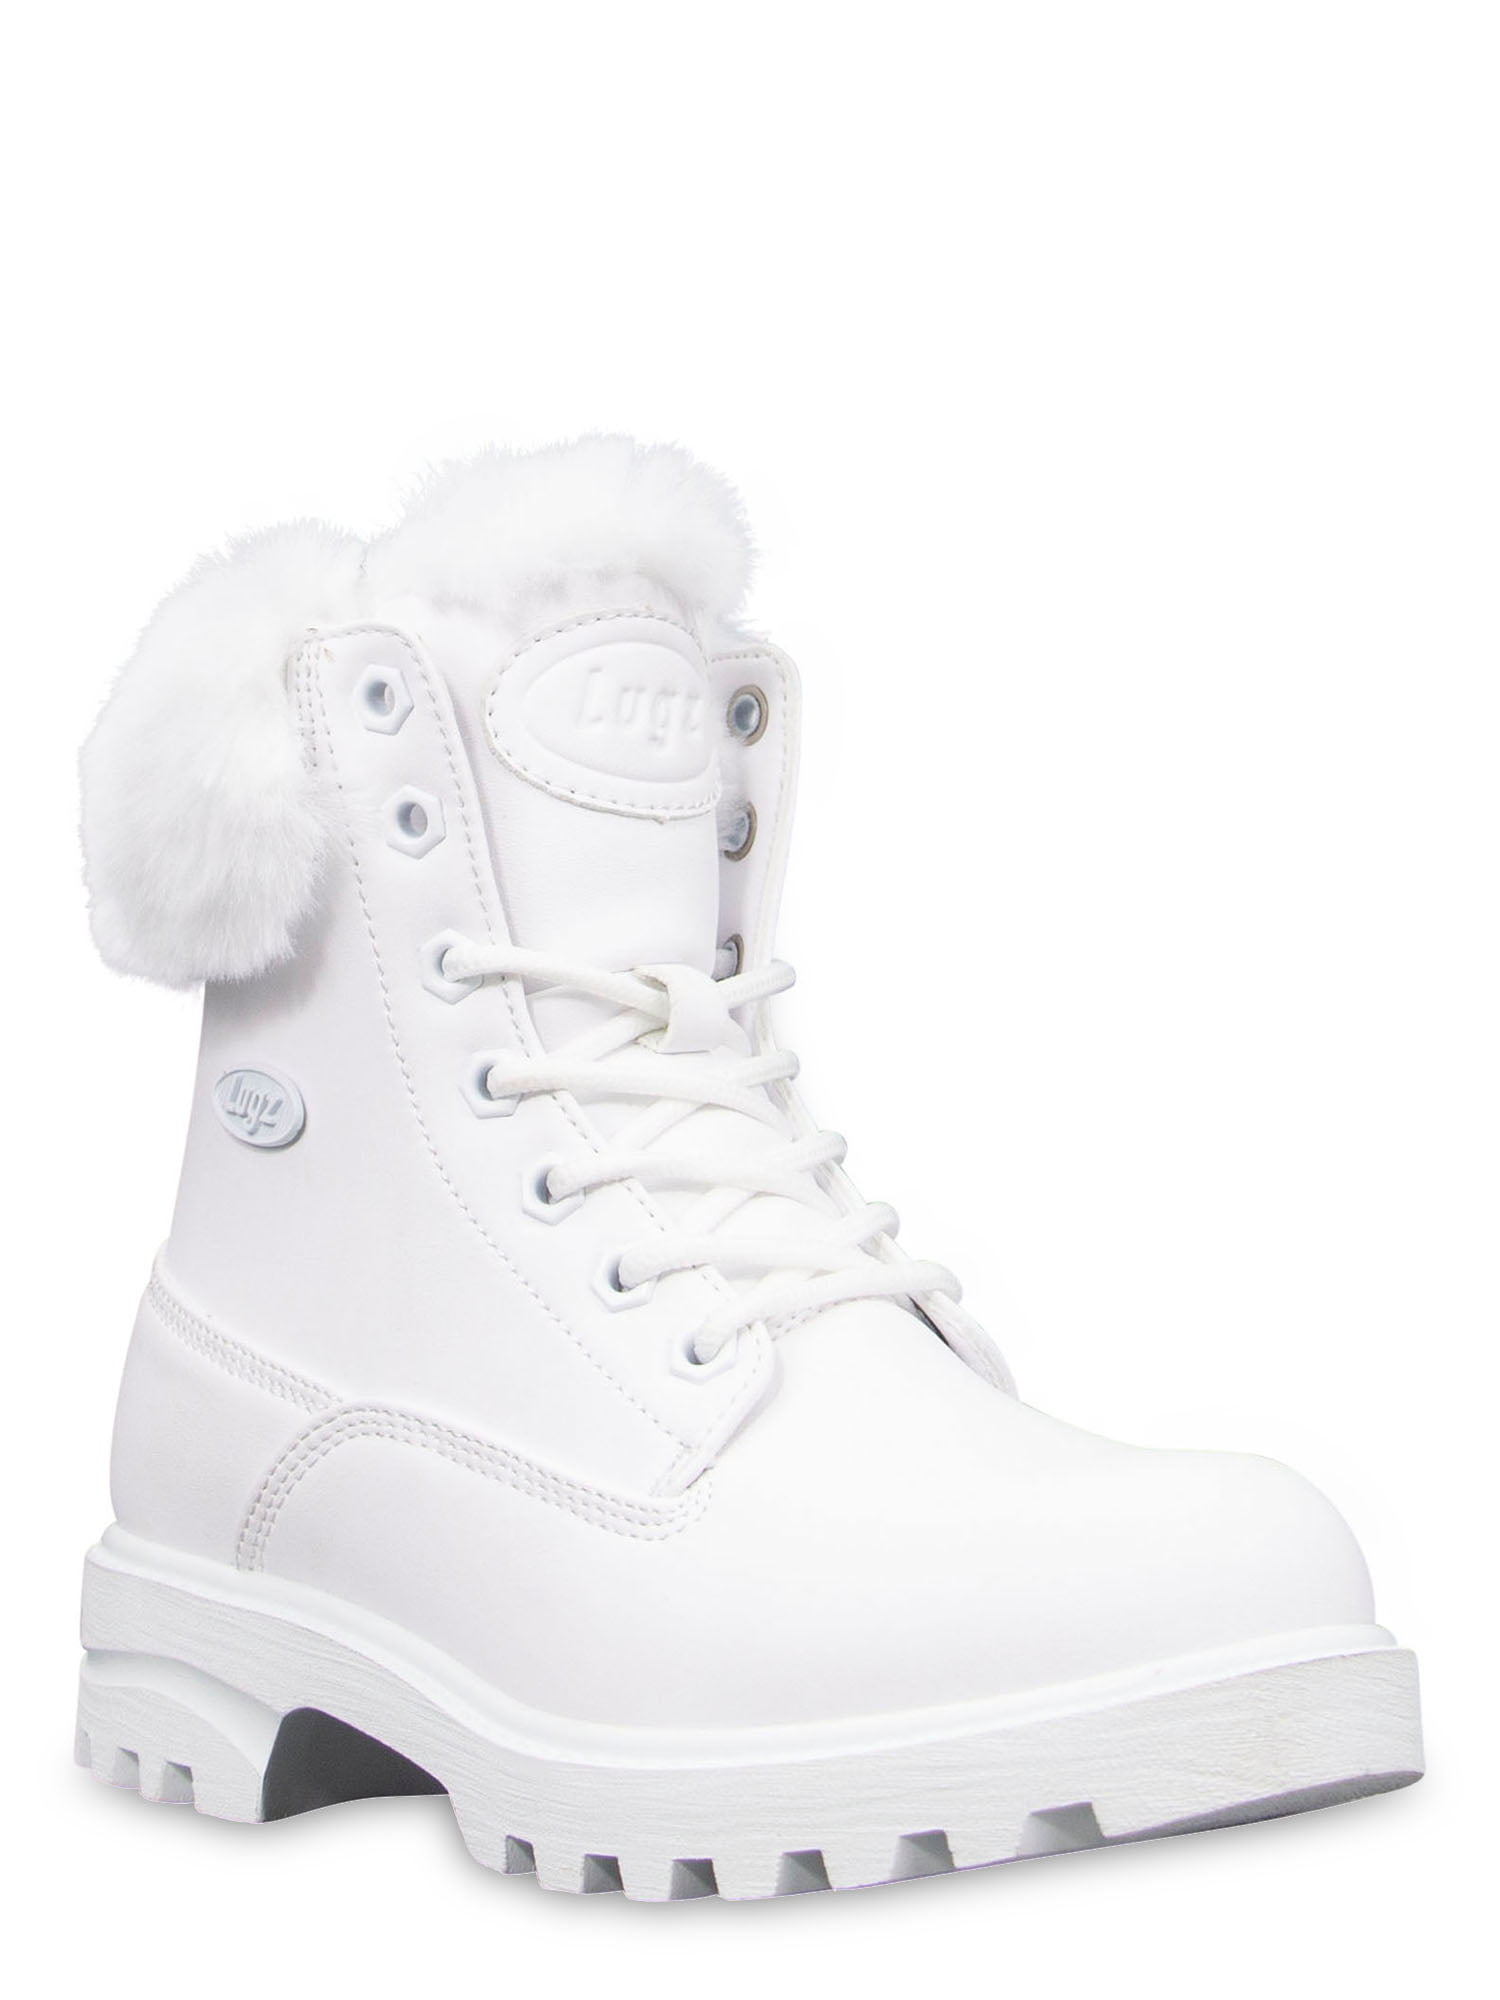 white lugz boots